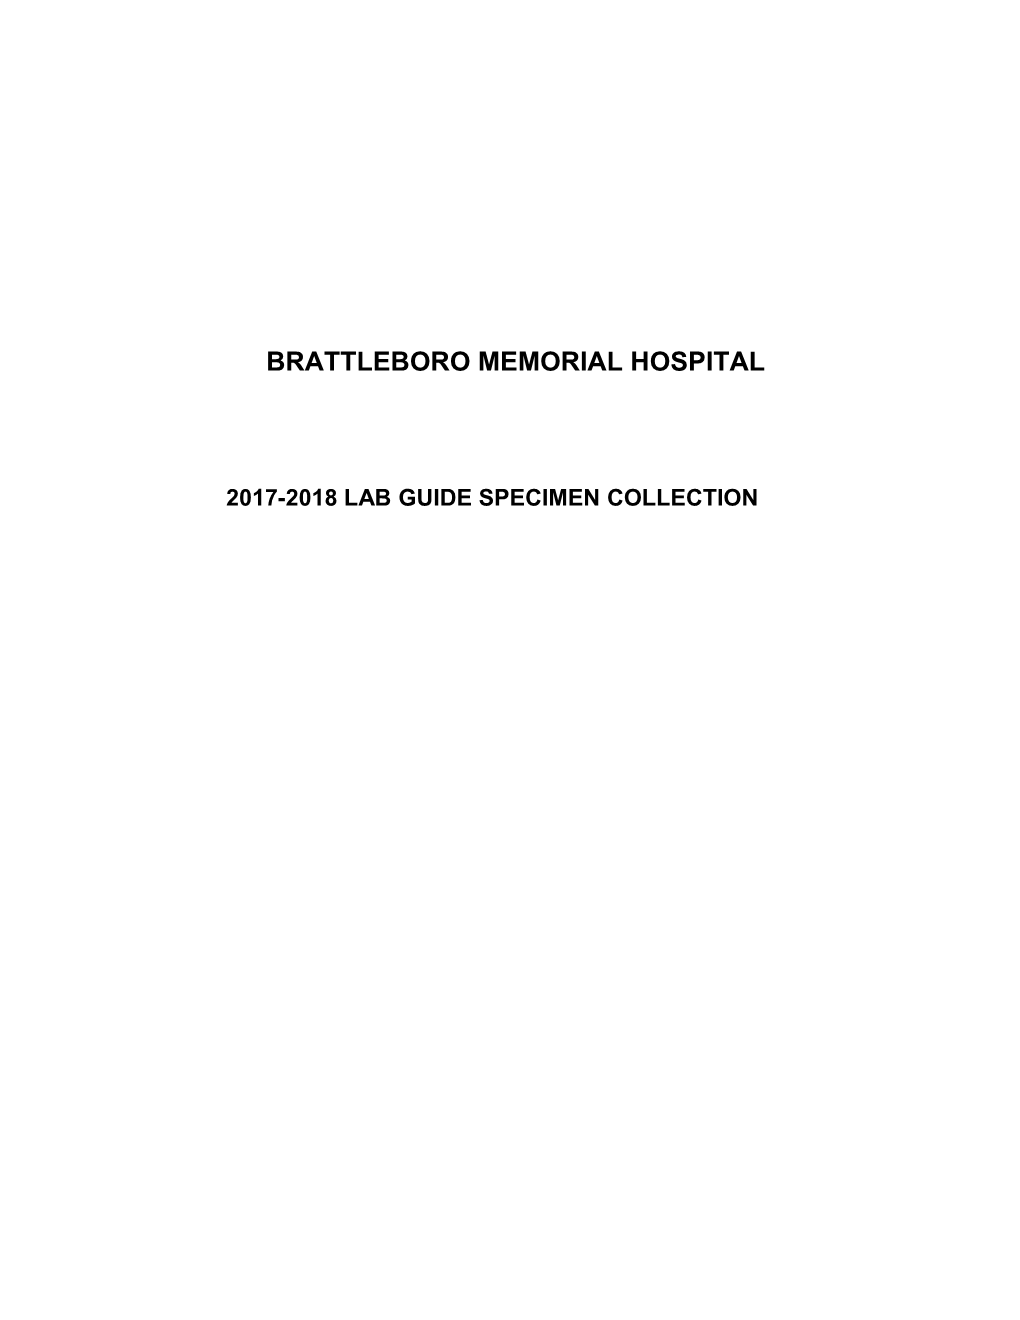 2017-2018 Lab Guide Specimen Collection